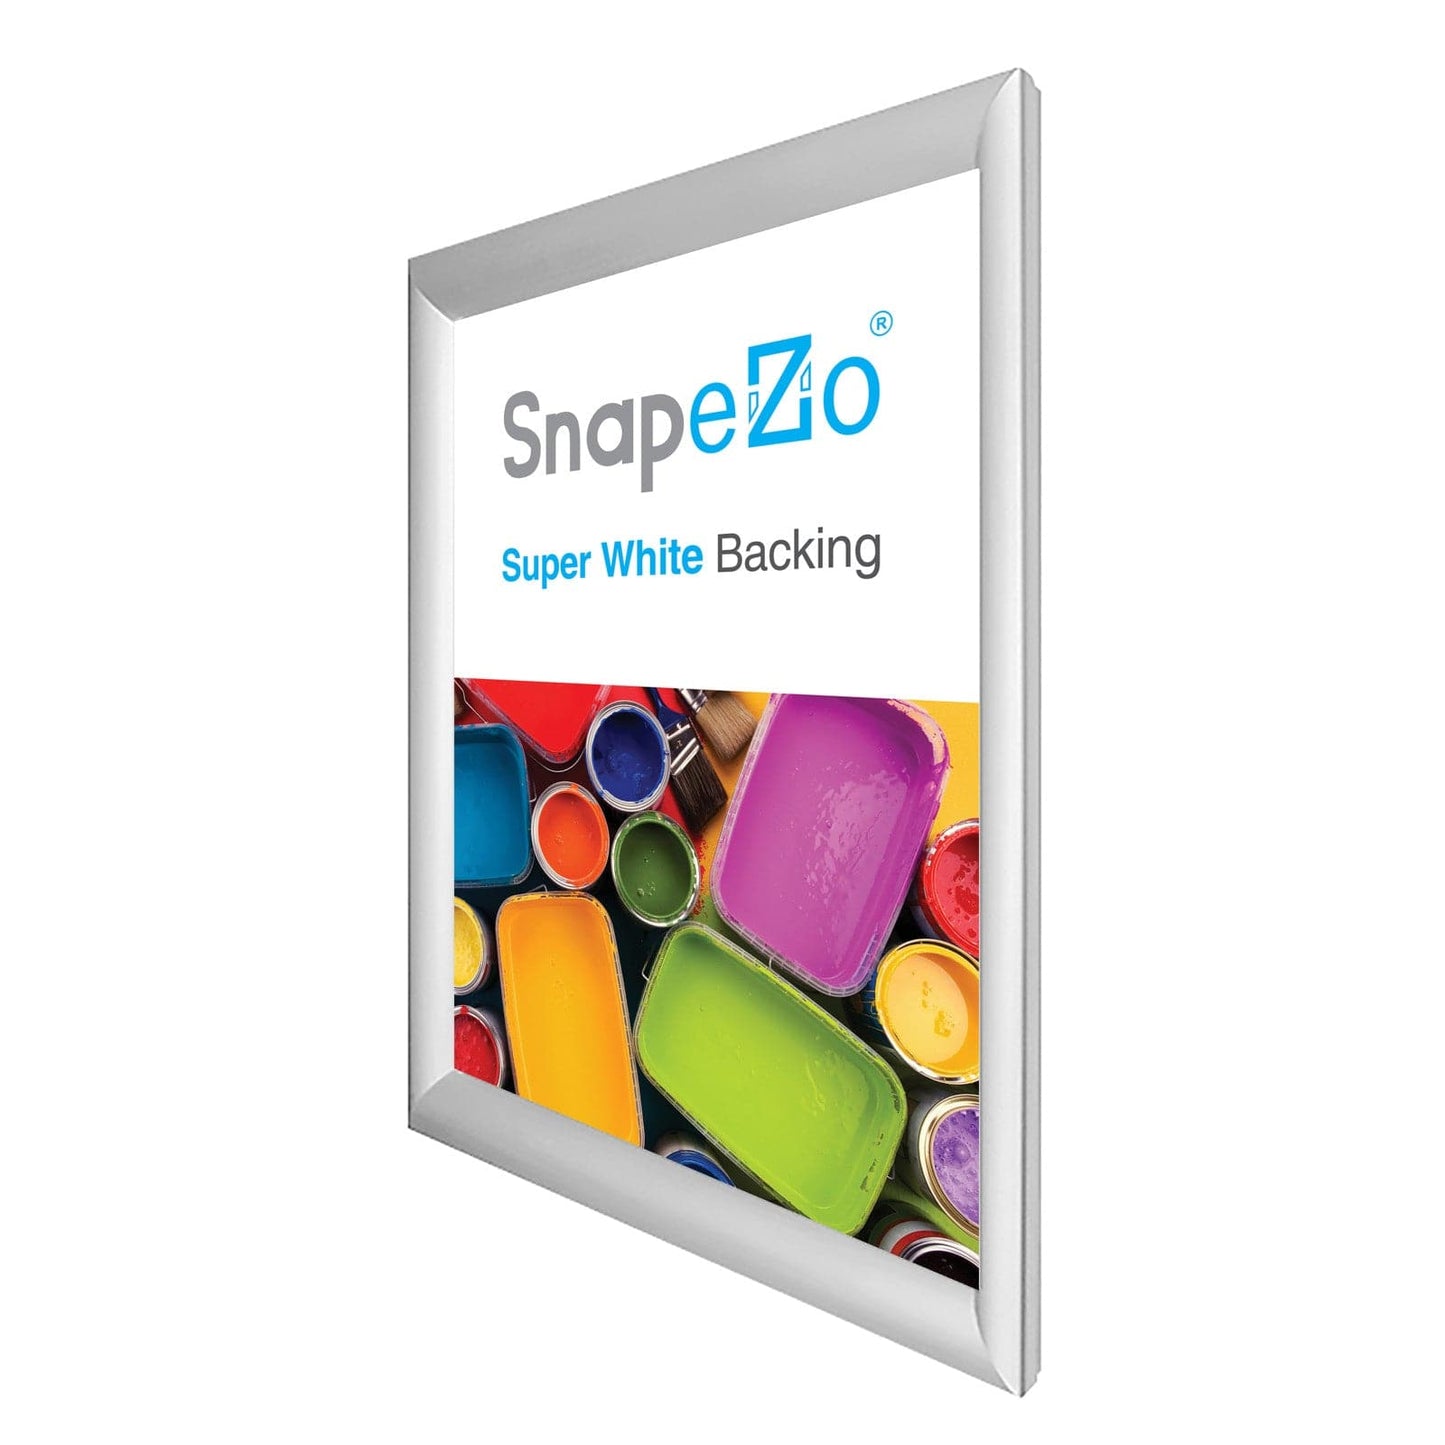 27x39 Silver SnapeZo® Snap Frame - 1.2" Profile - Snap Frames Direct